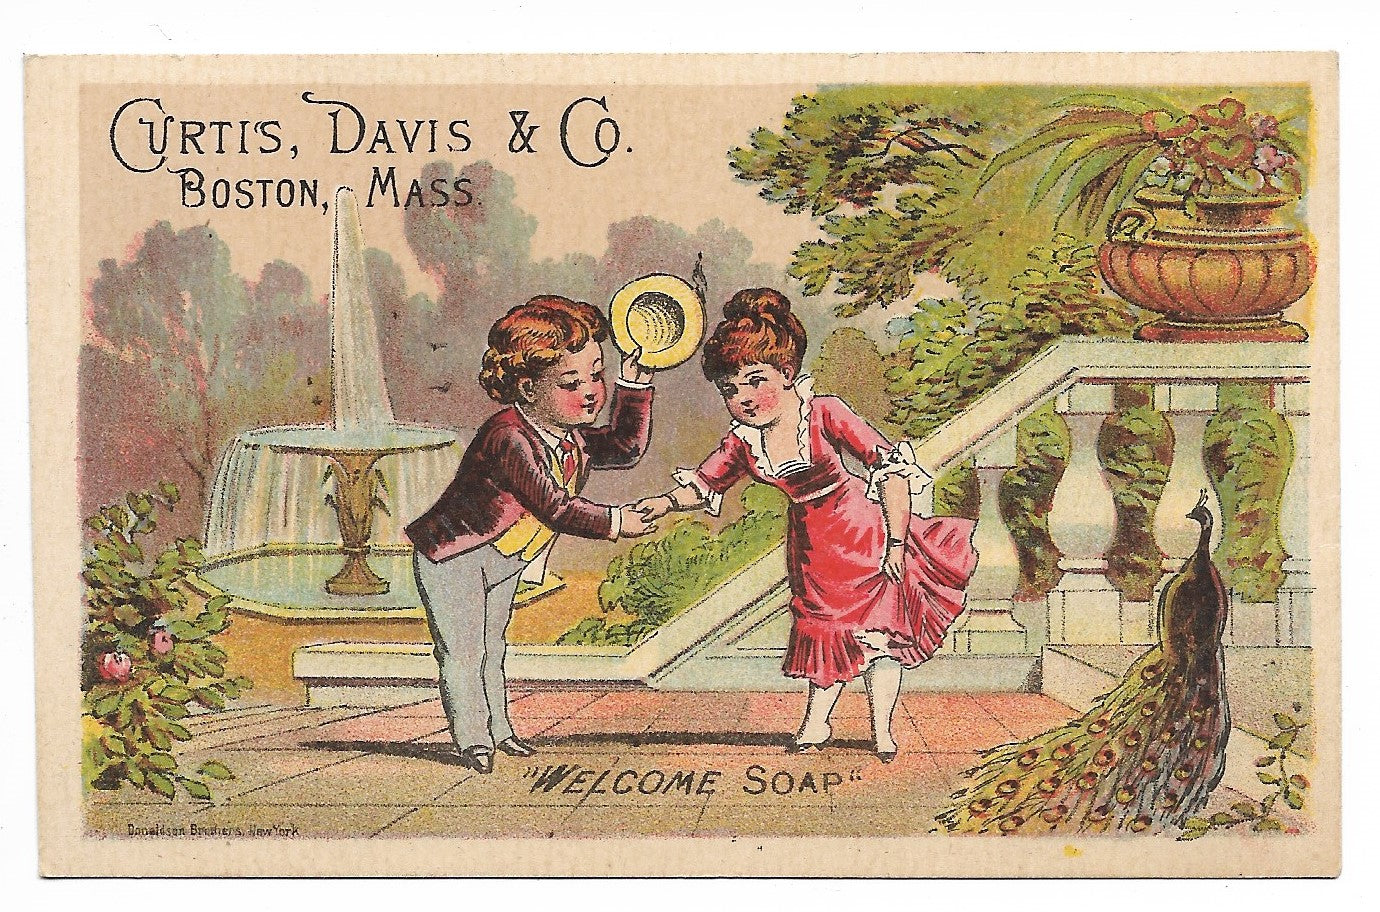 Curtis. Davis & Co. "Welcome Soap" Antique Trade Card, Boston, Massachusetts (Peacock) - 4.25" x 2.75"